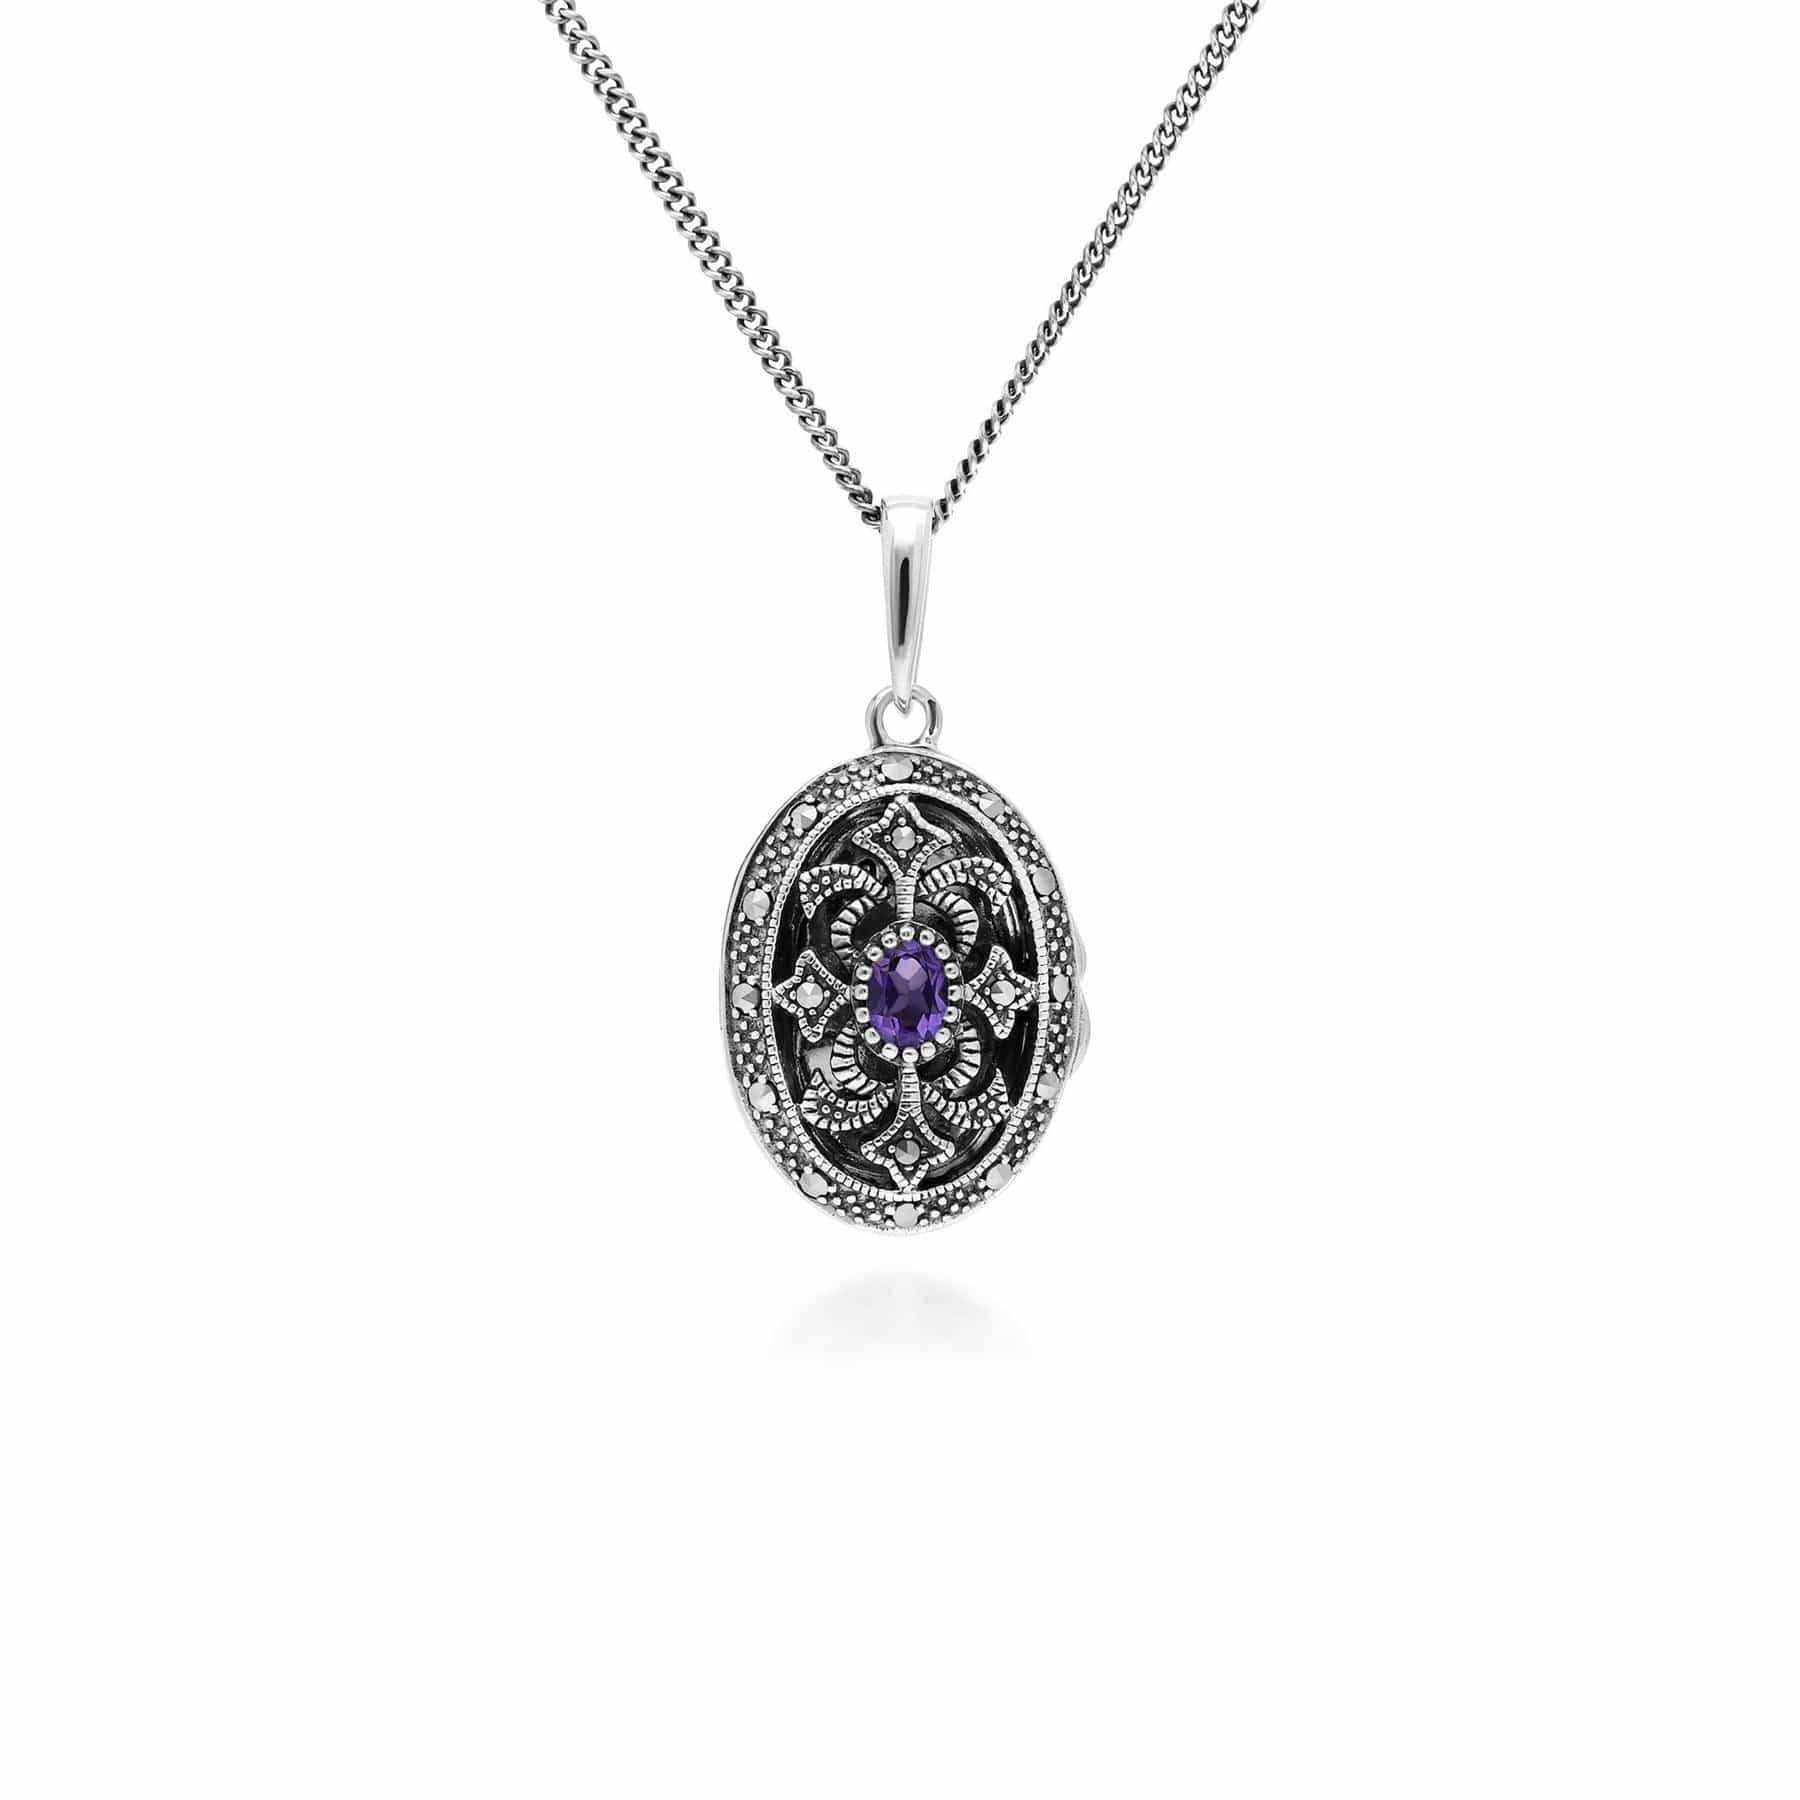 Art Nouveau Style Oval Amethyst & Marcasite Locket Necklace in 925 Sterling Silver - Gemondo